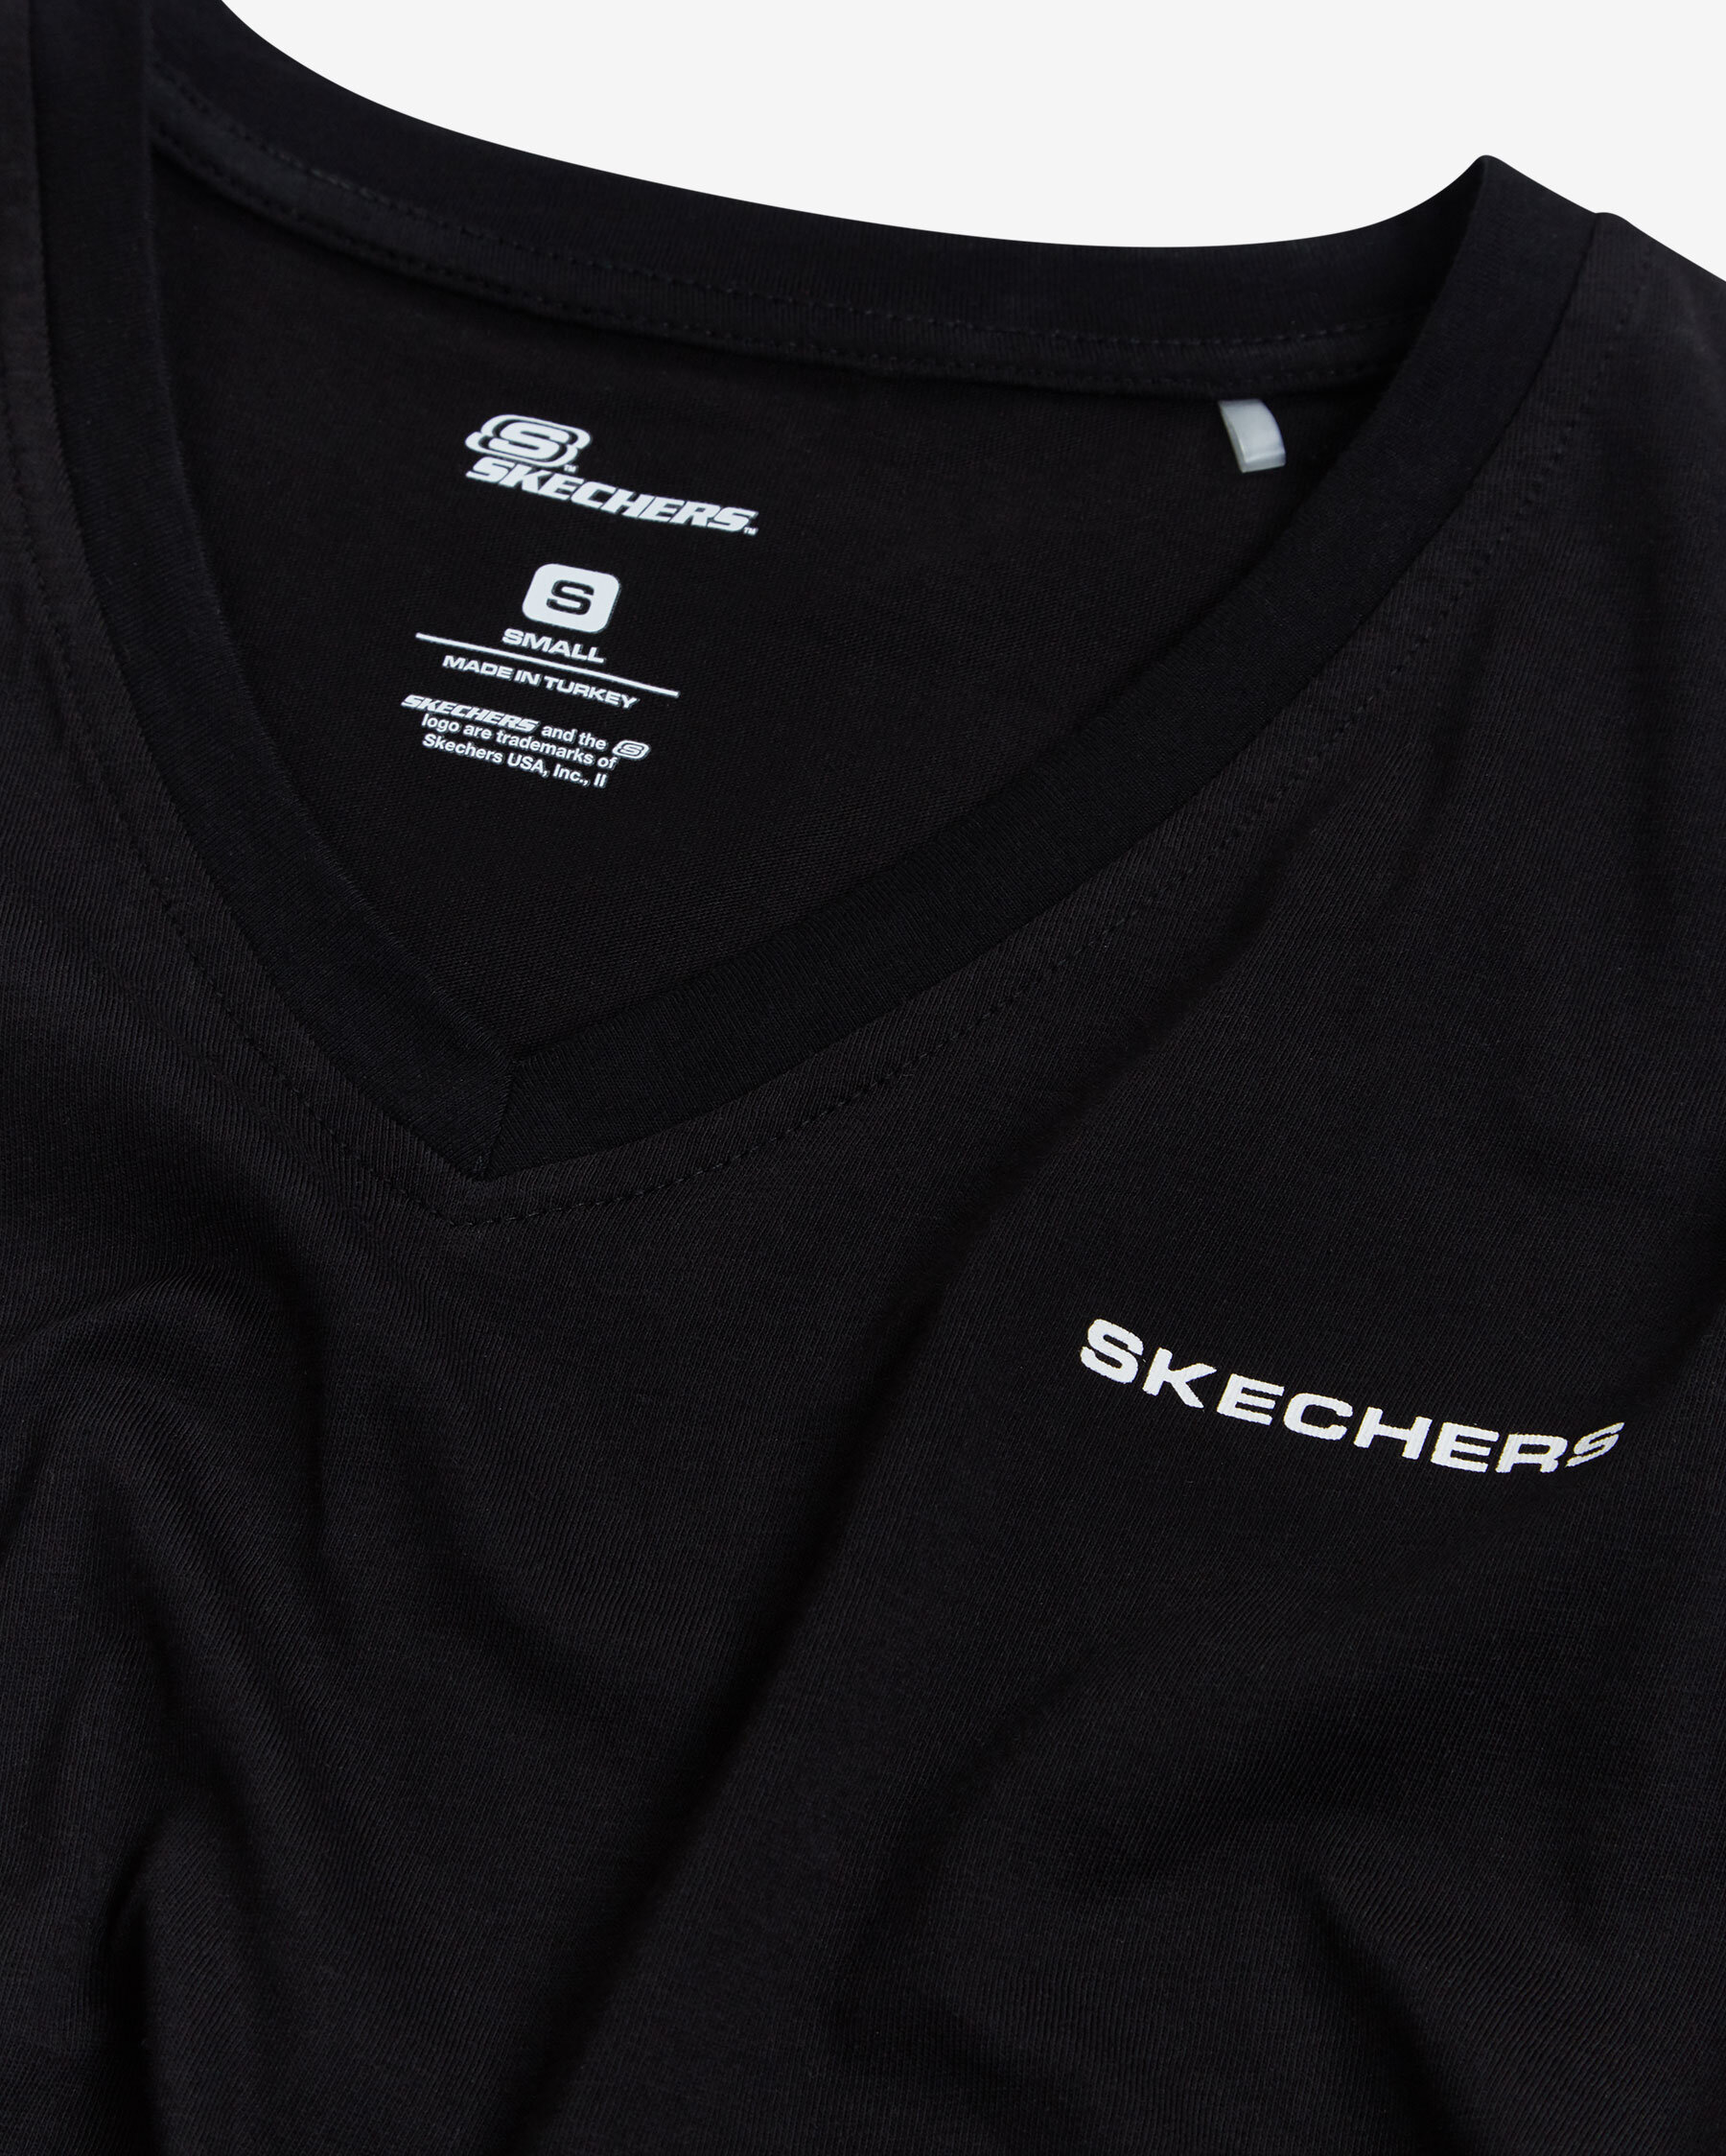 Skechers New Basics V Neck Siyah Tişört (S212399-001)